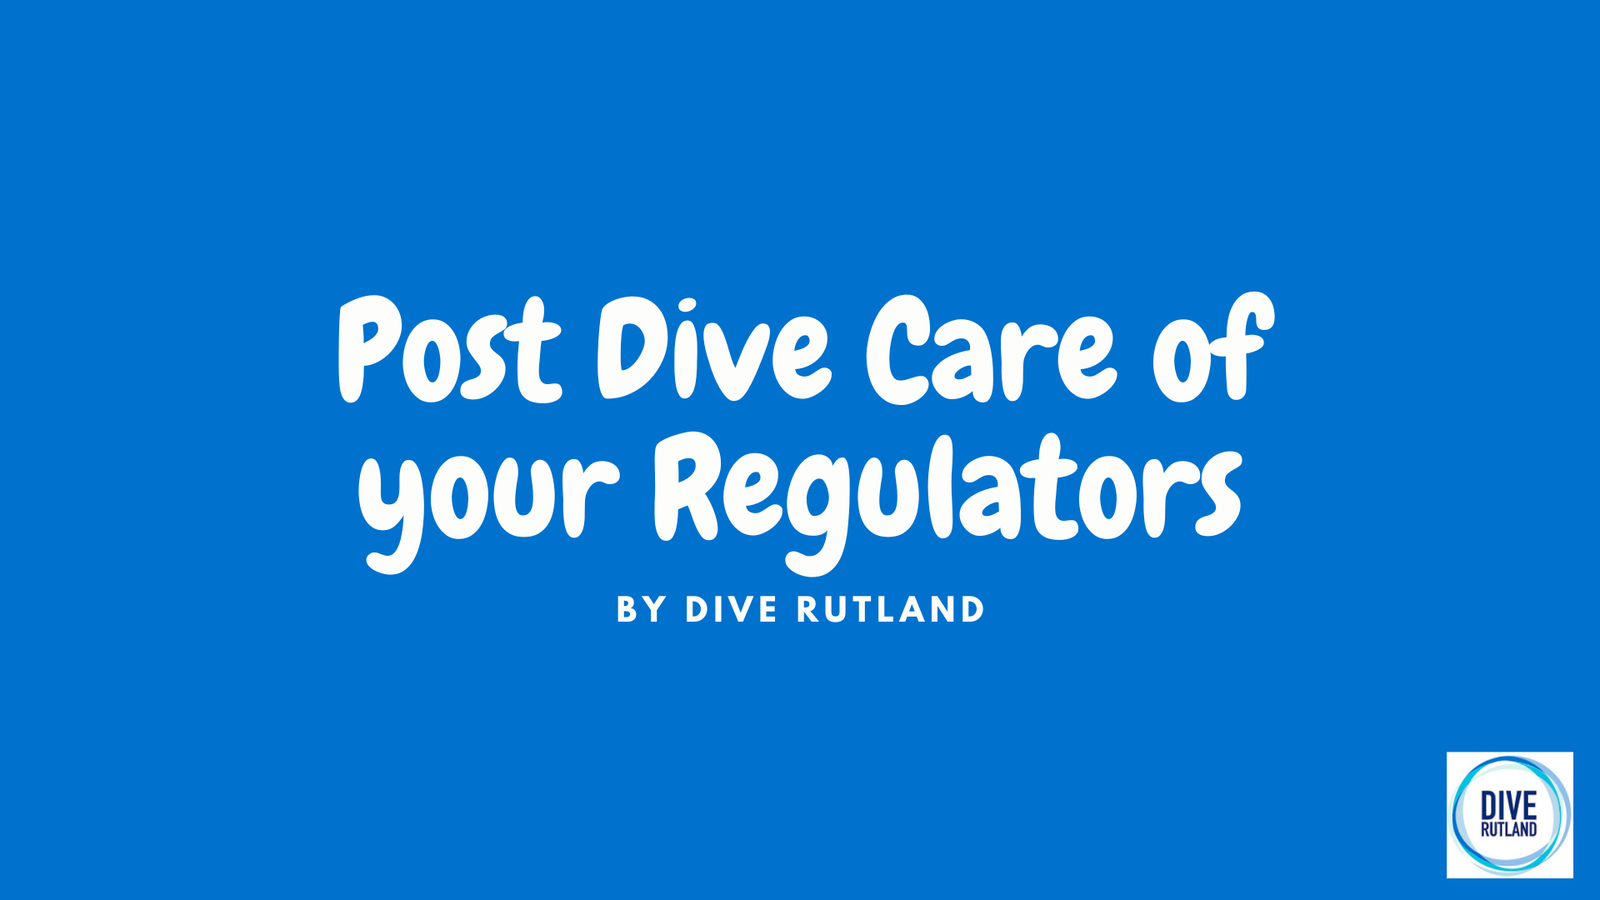 Post Dive Care of your Regulators